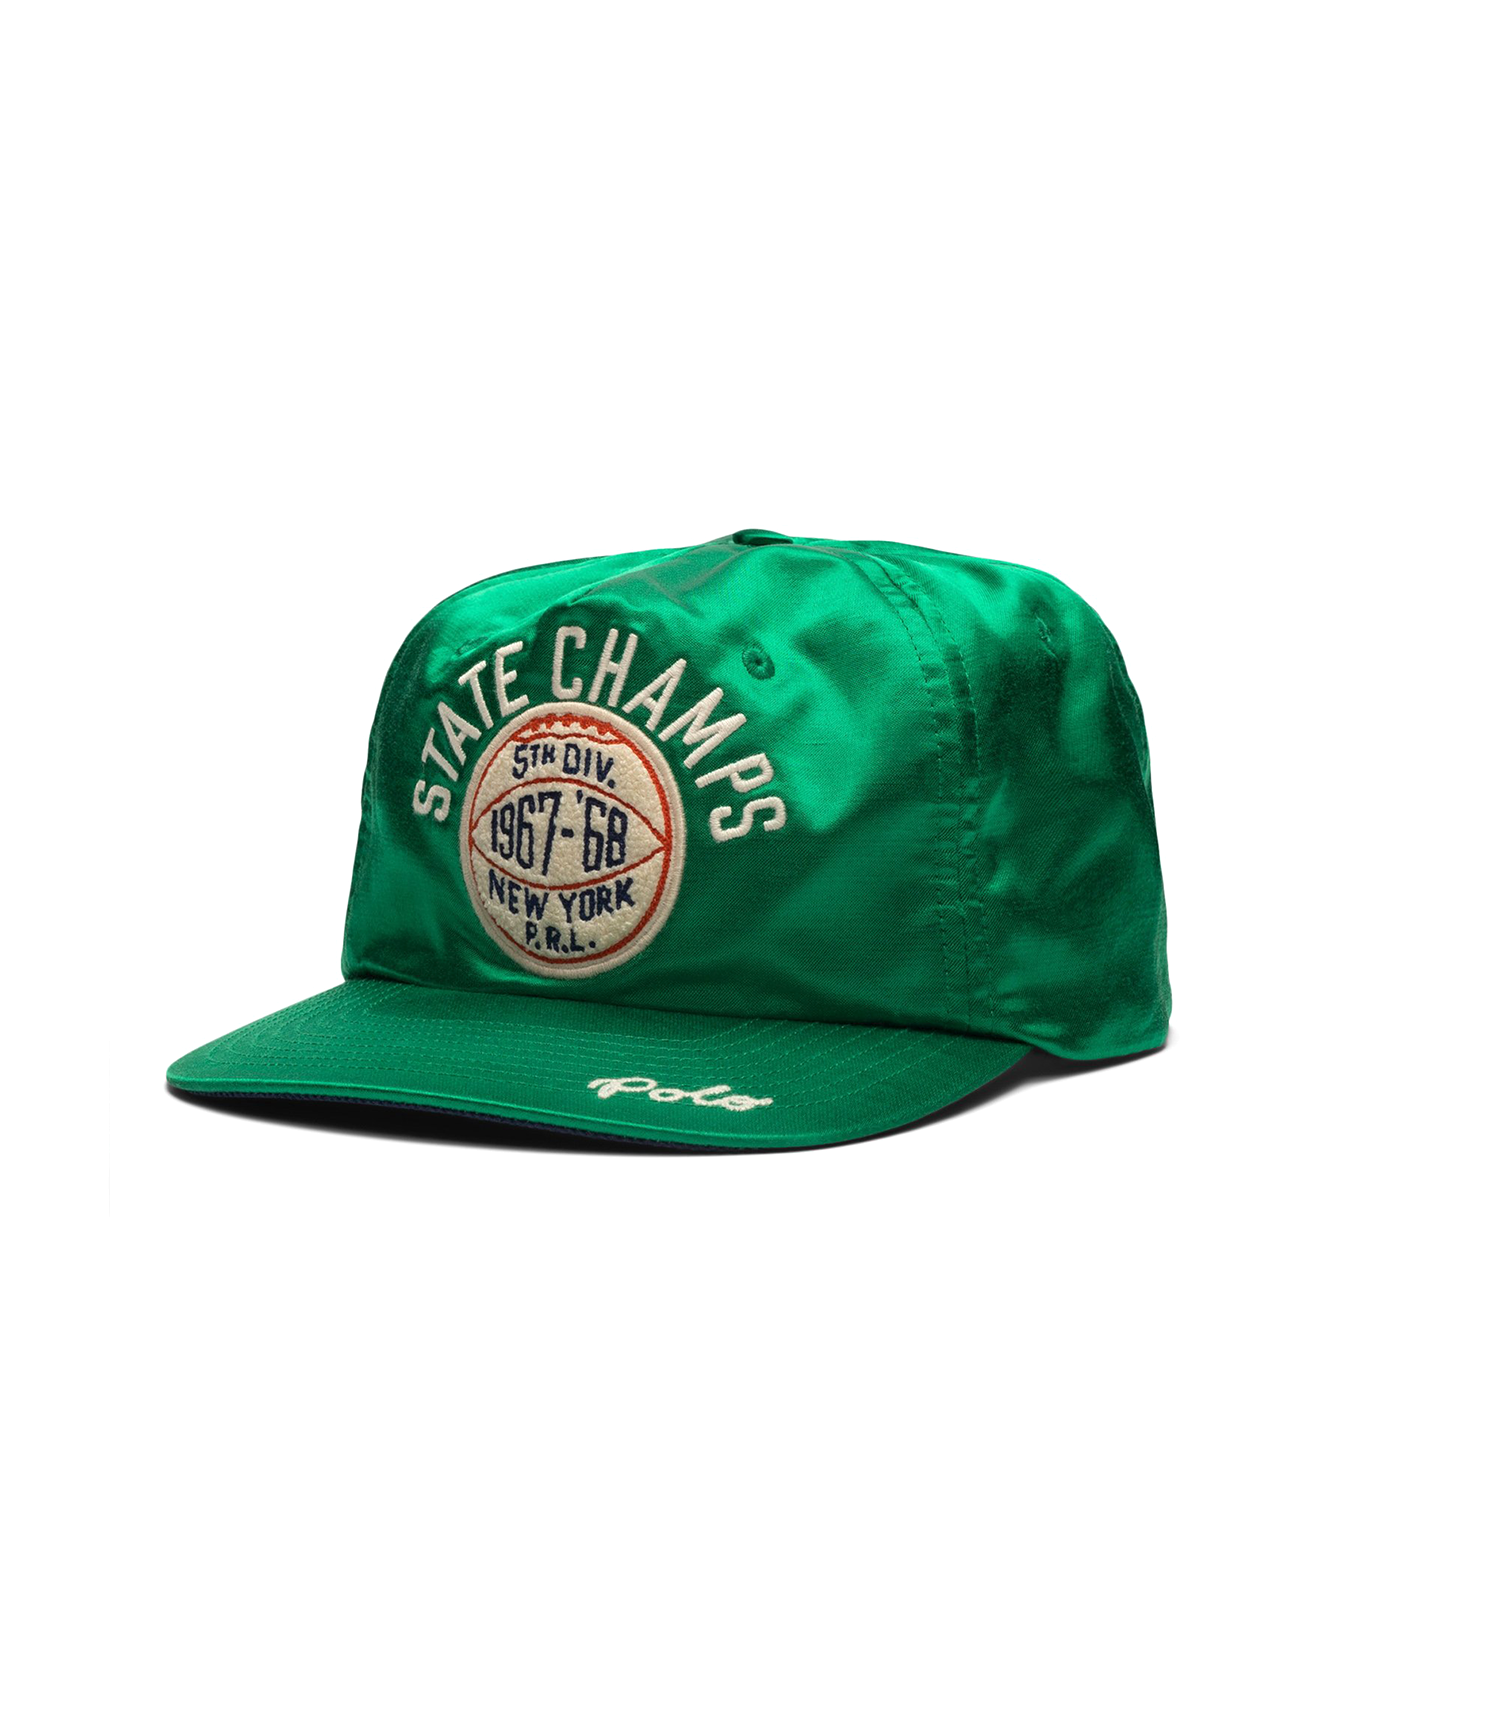 New York Baseball Cap - Green